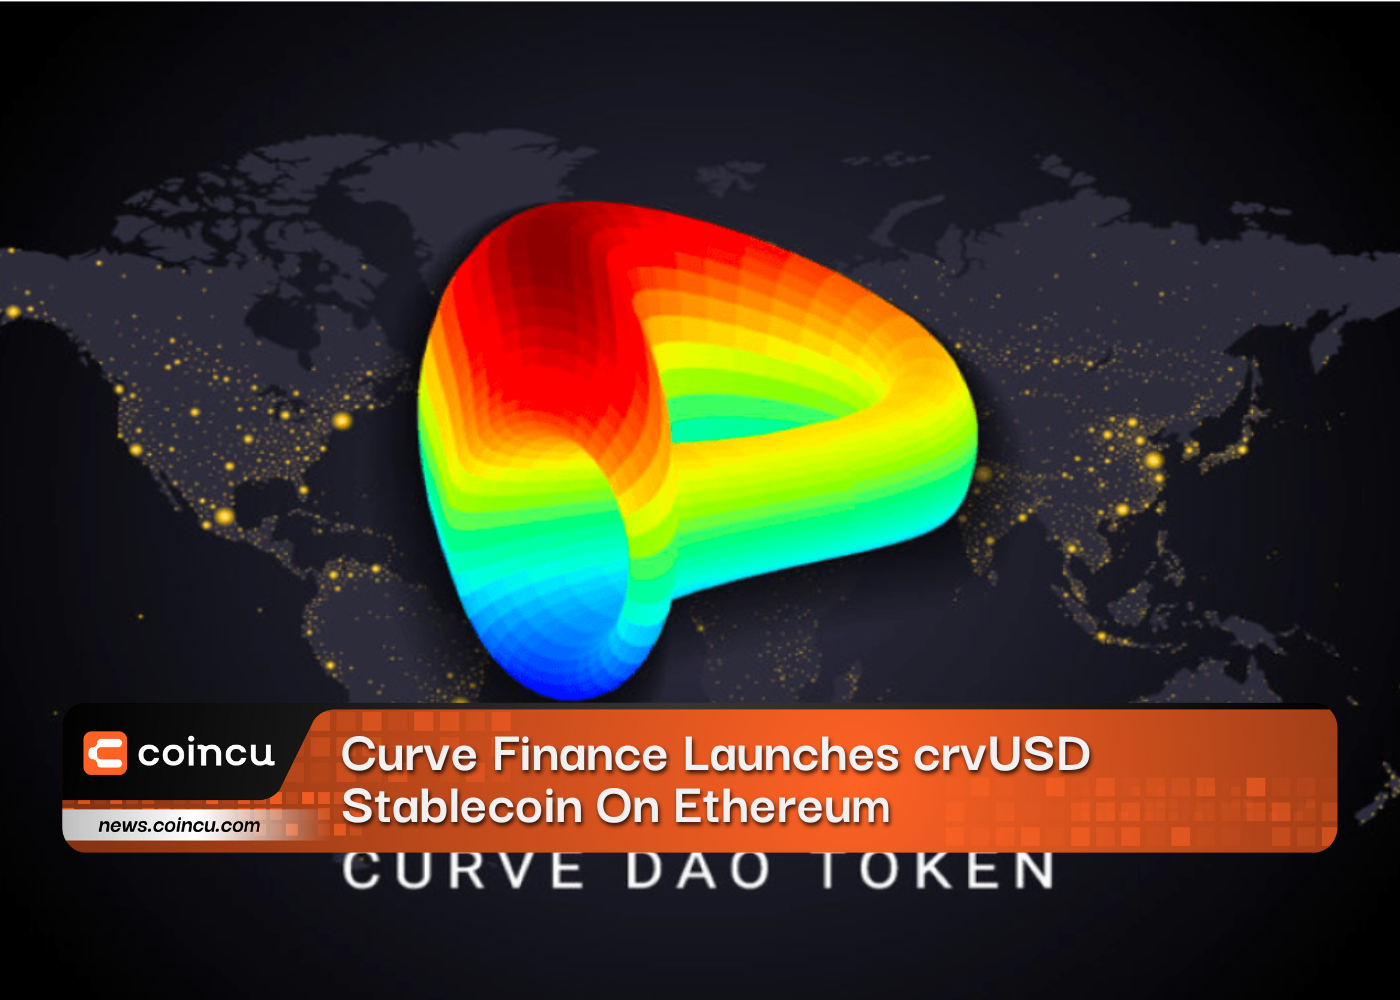 Curve Finance Launches crvUSD